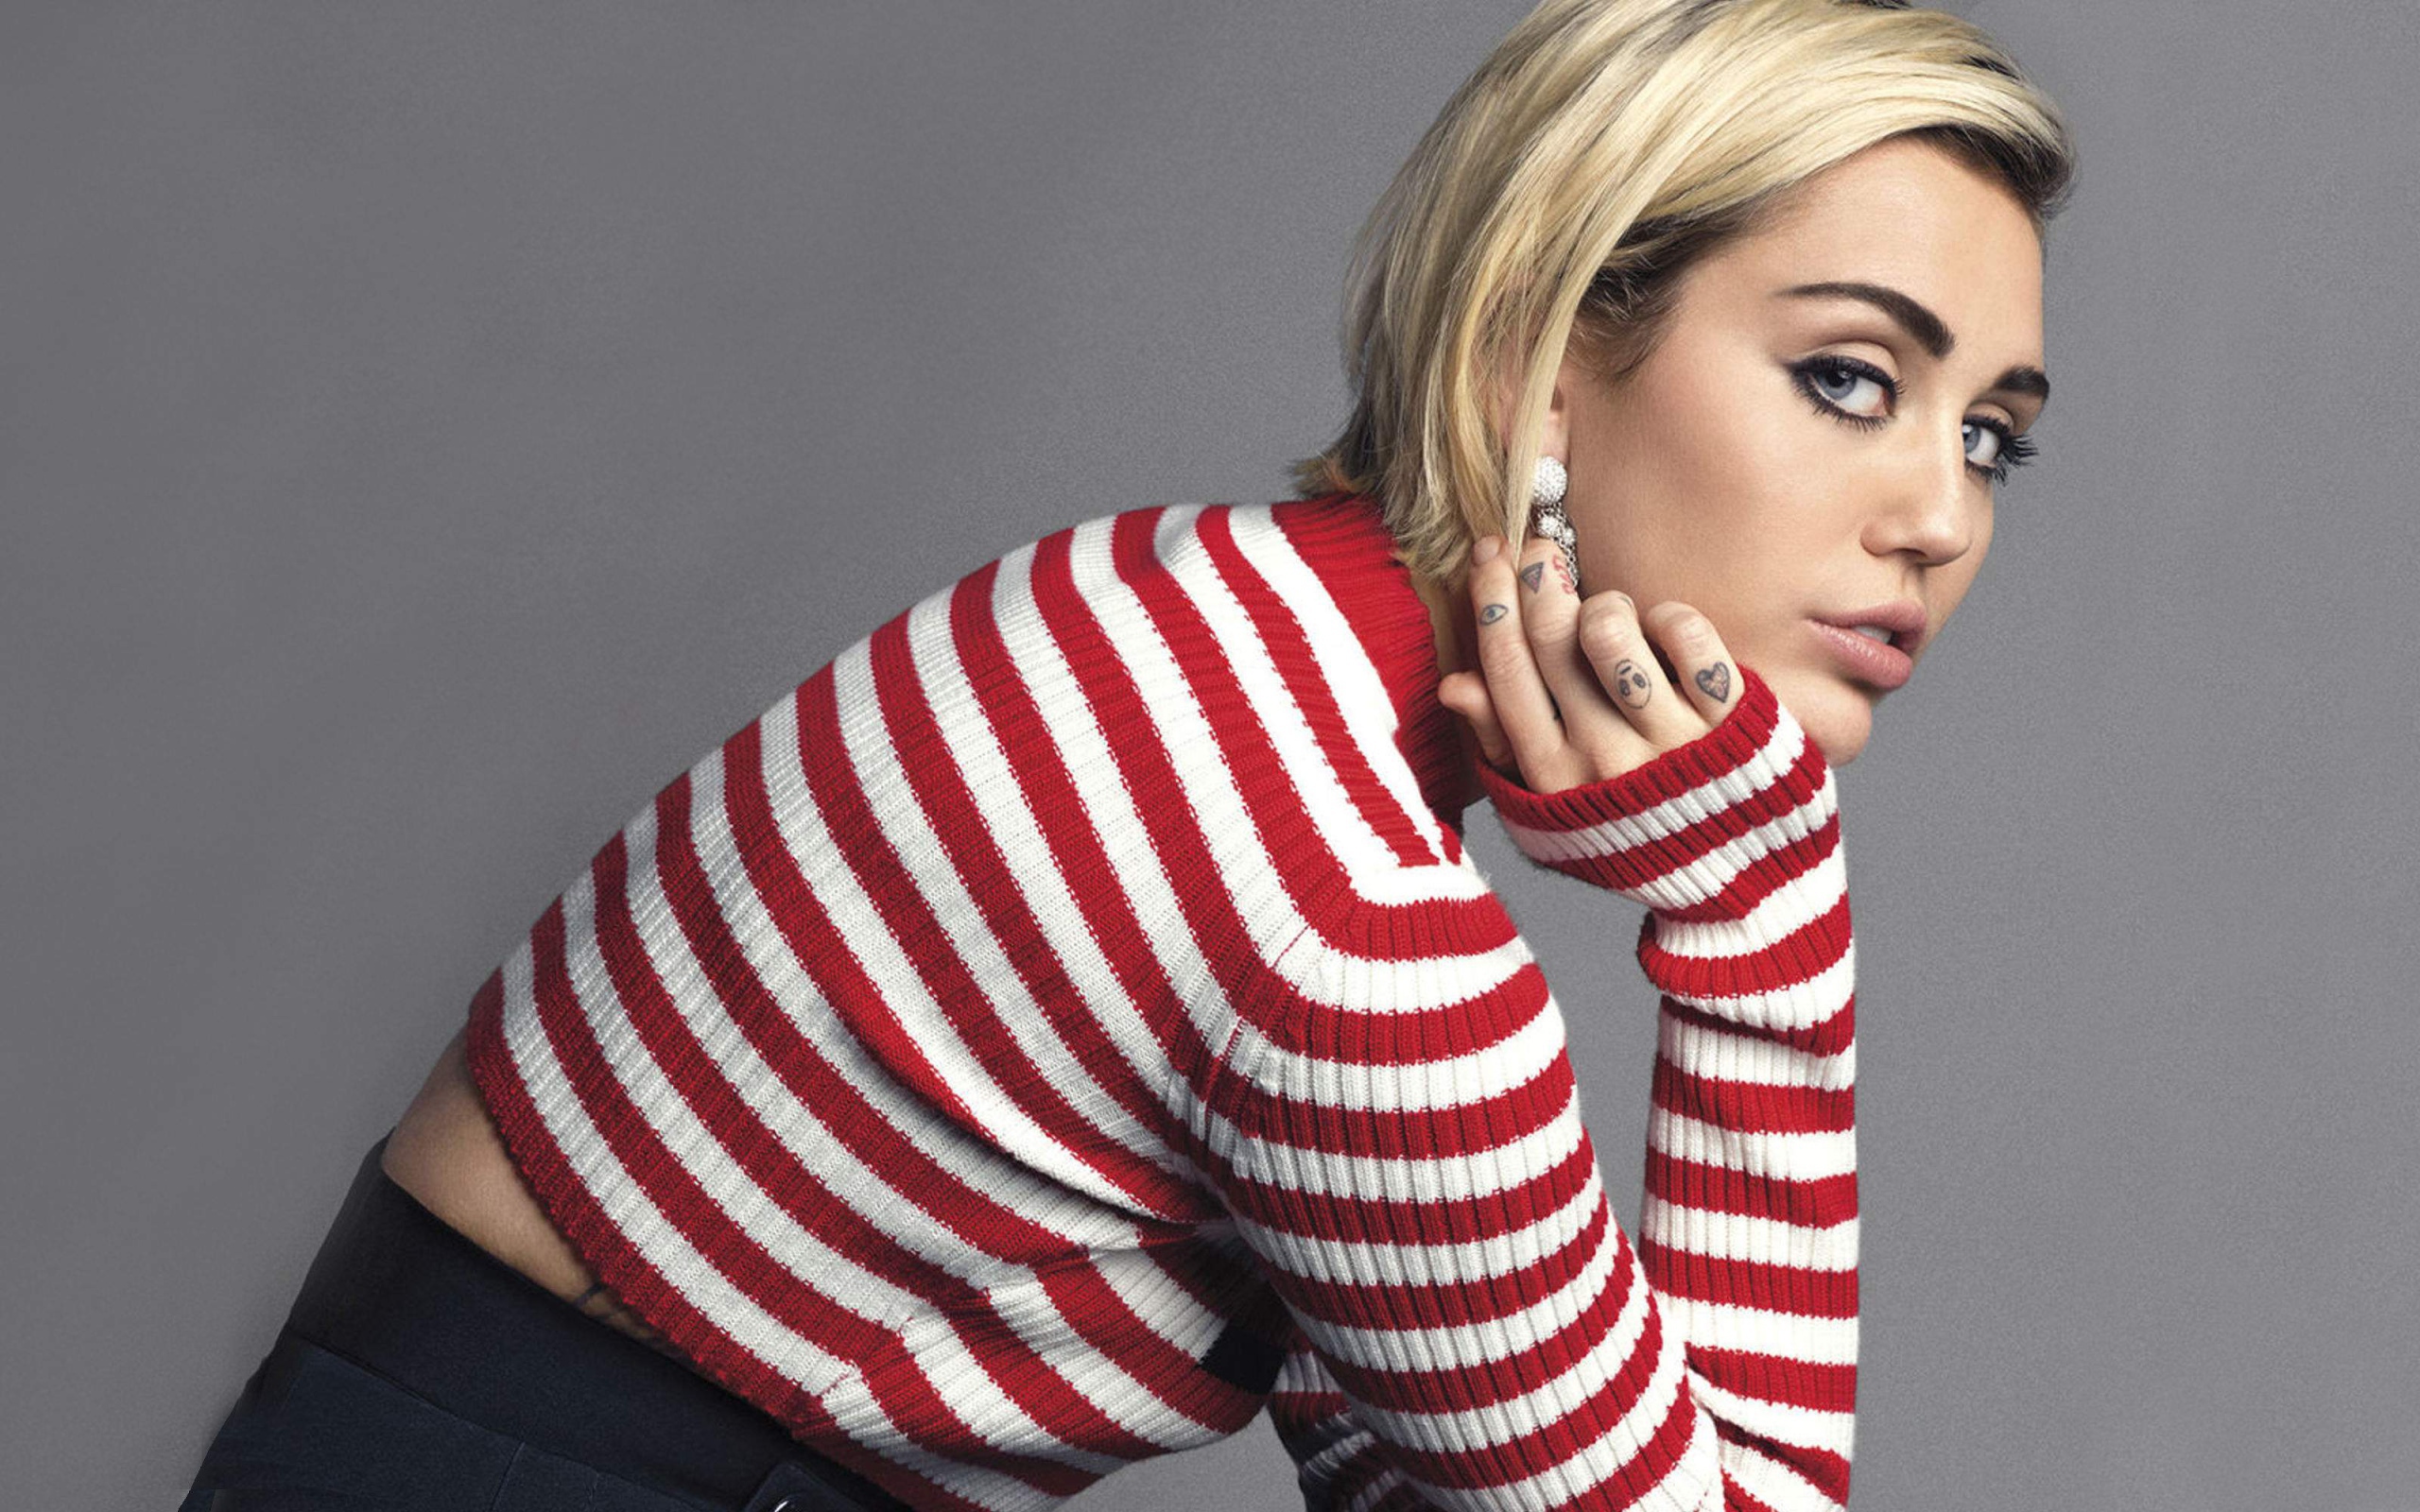 Popular singer Miley Cyrus, 2017